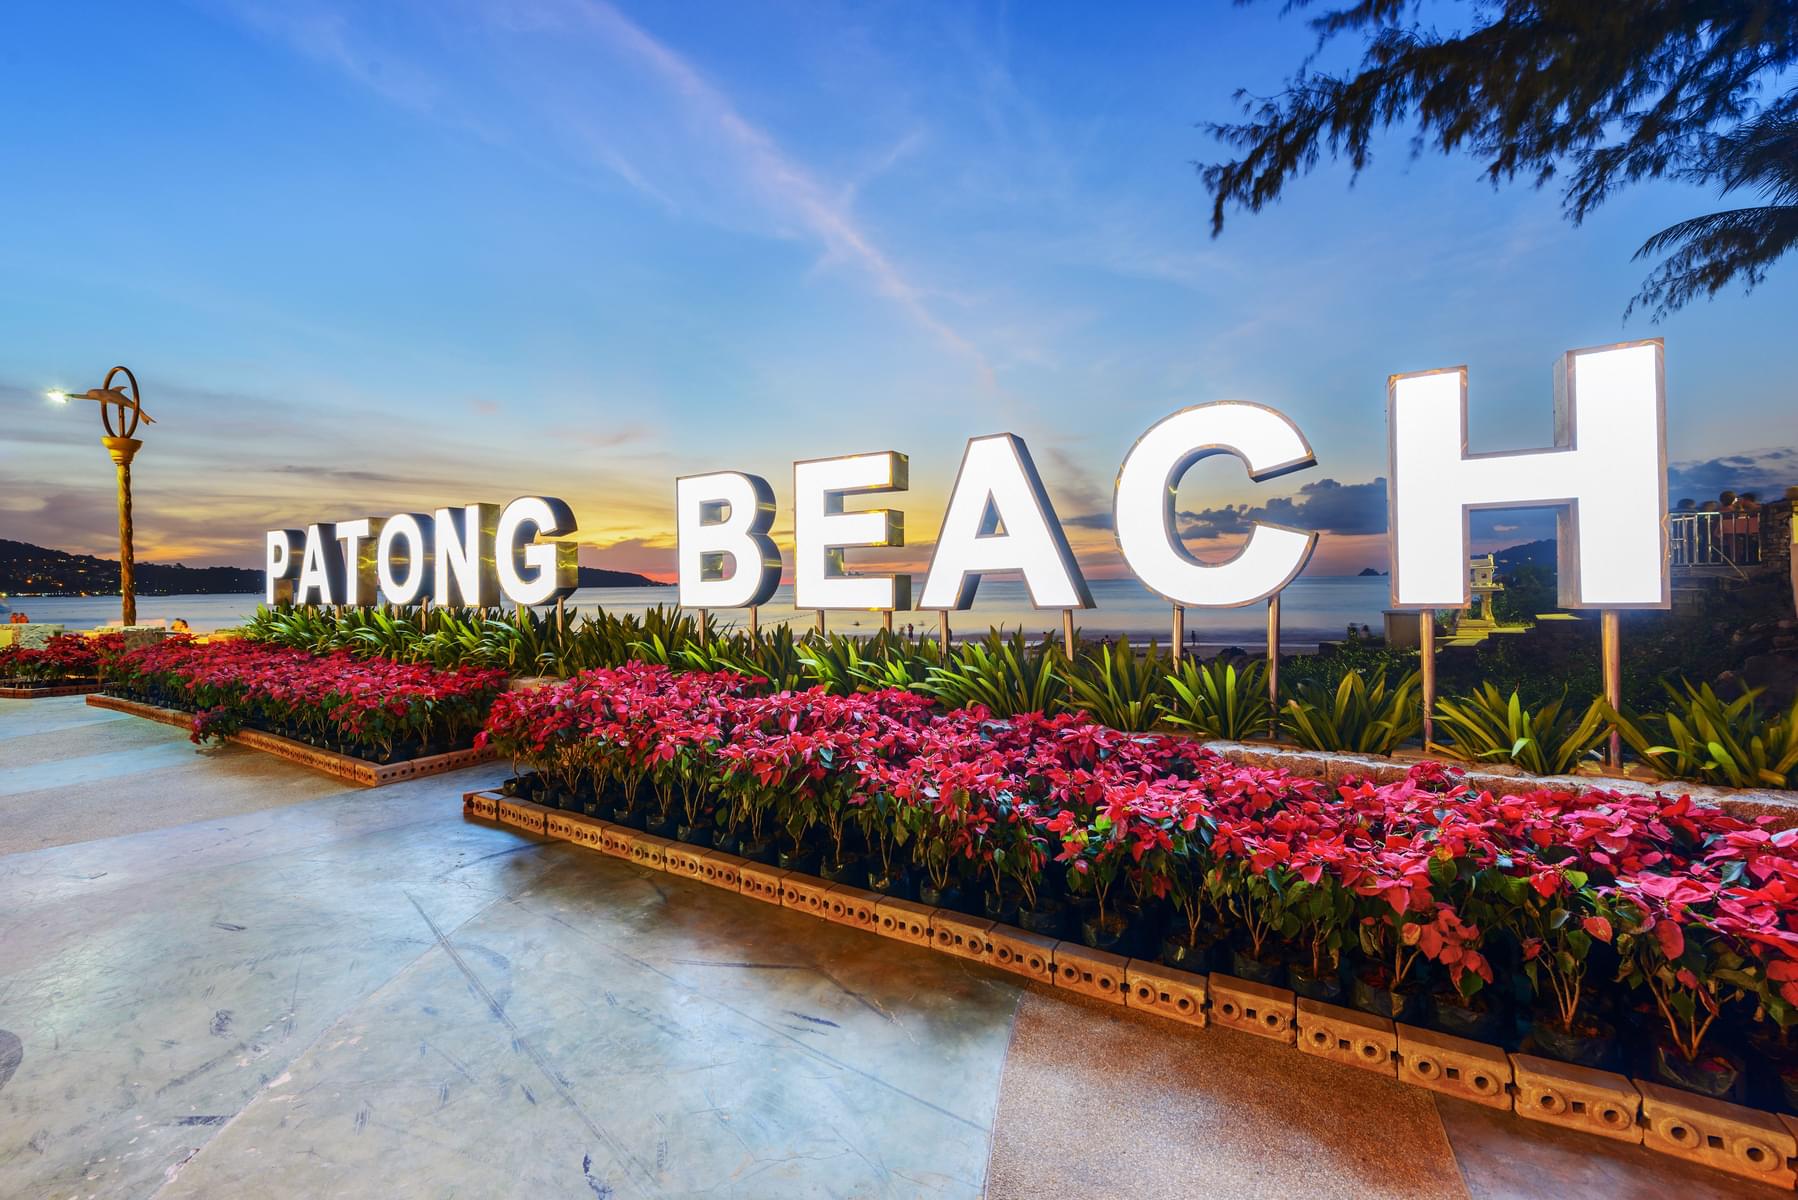  Patong Beach